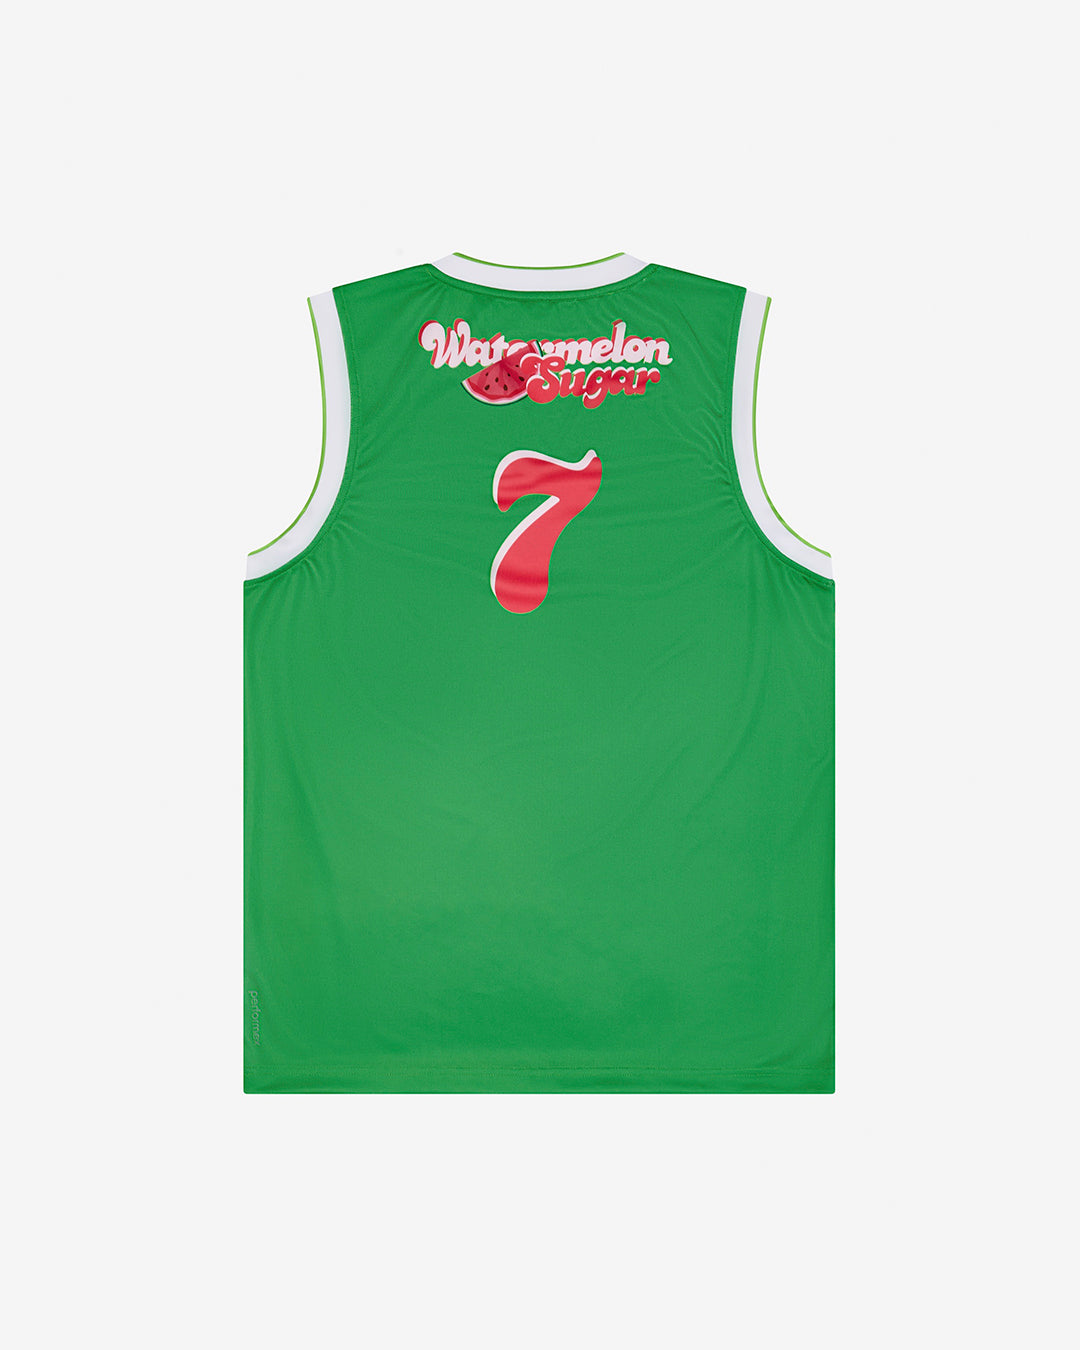 ED7:80 - Watermelon Basketball Singlet - Green